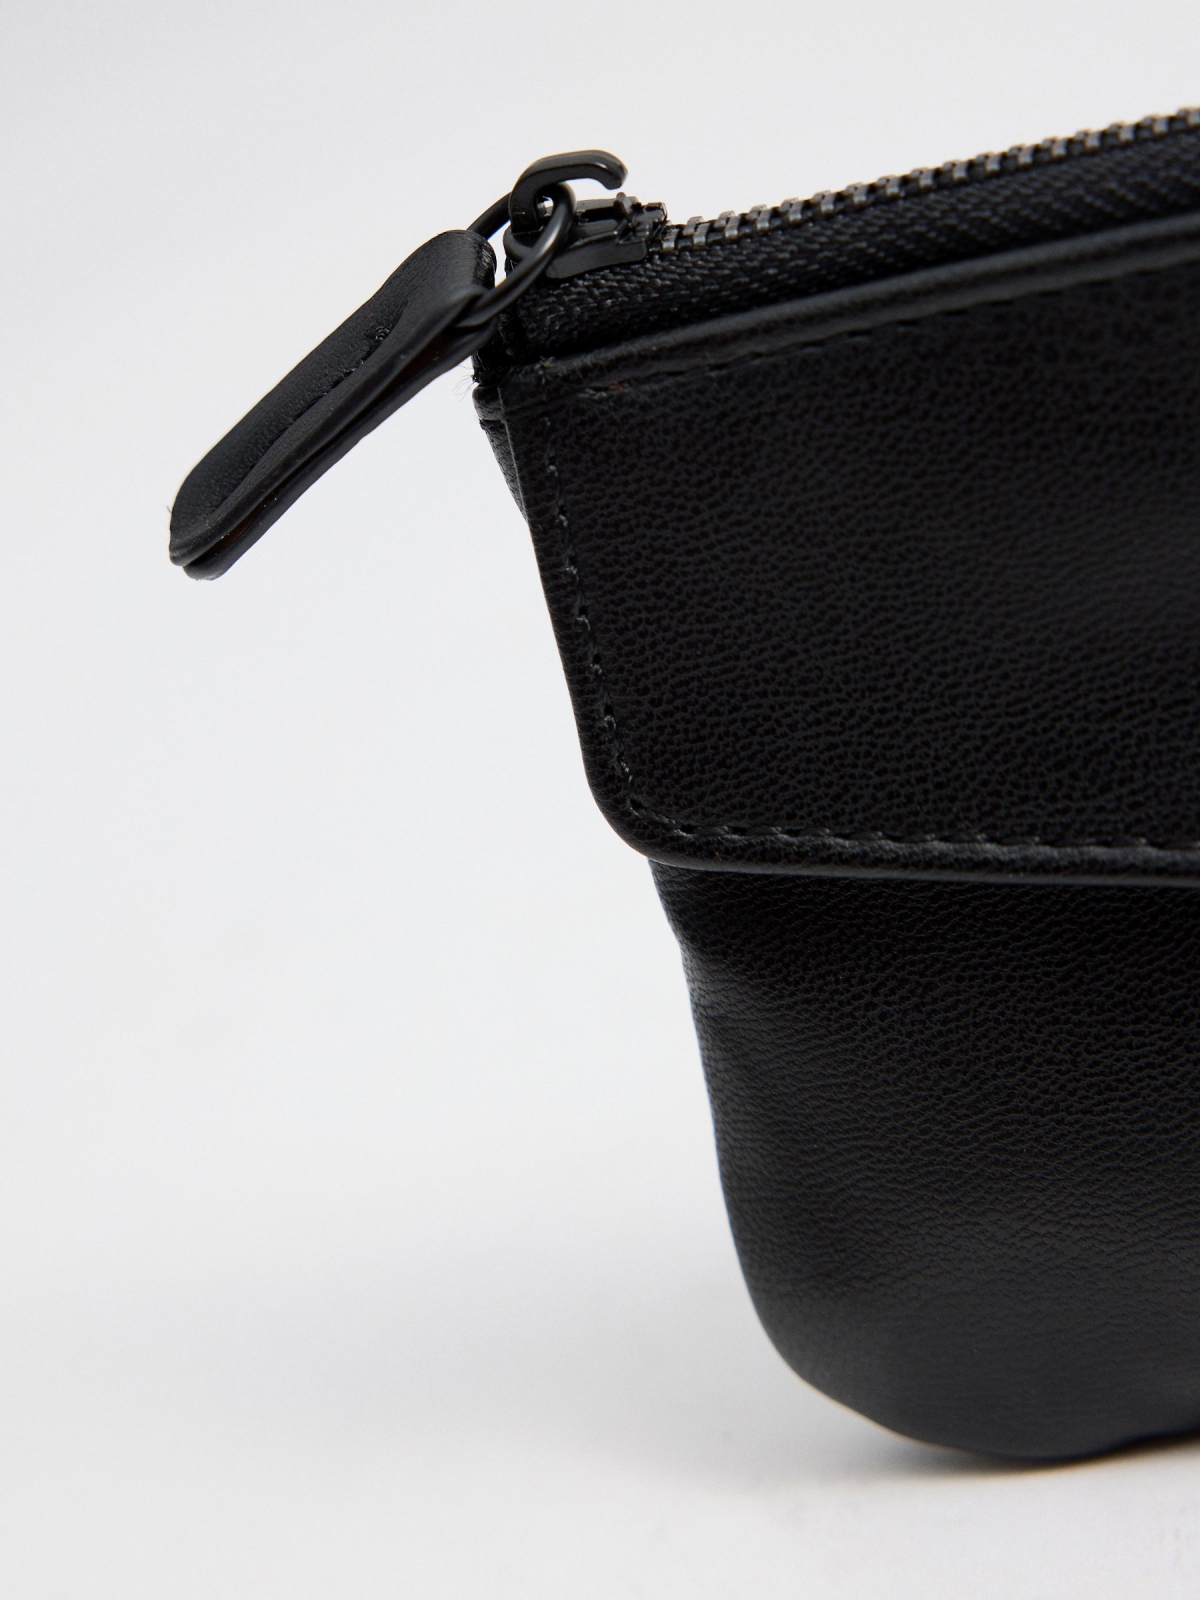 Black leather effect purse black back view